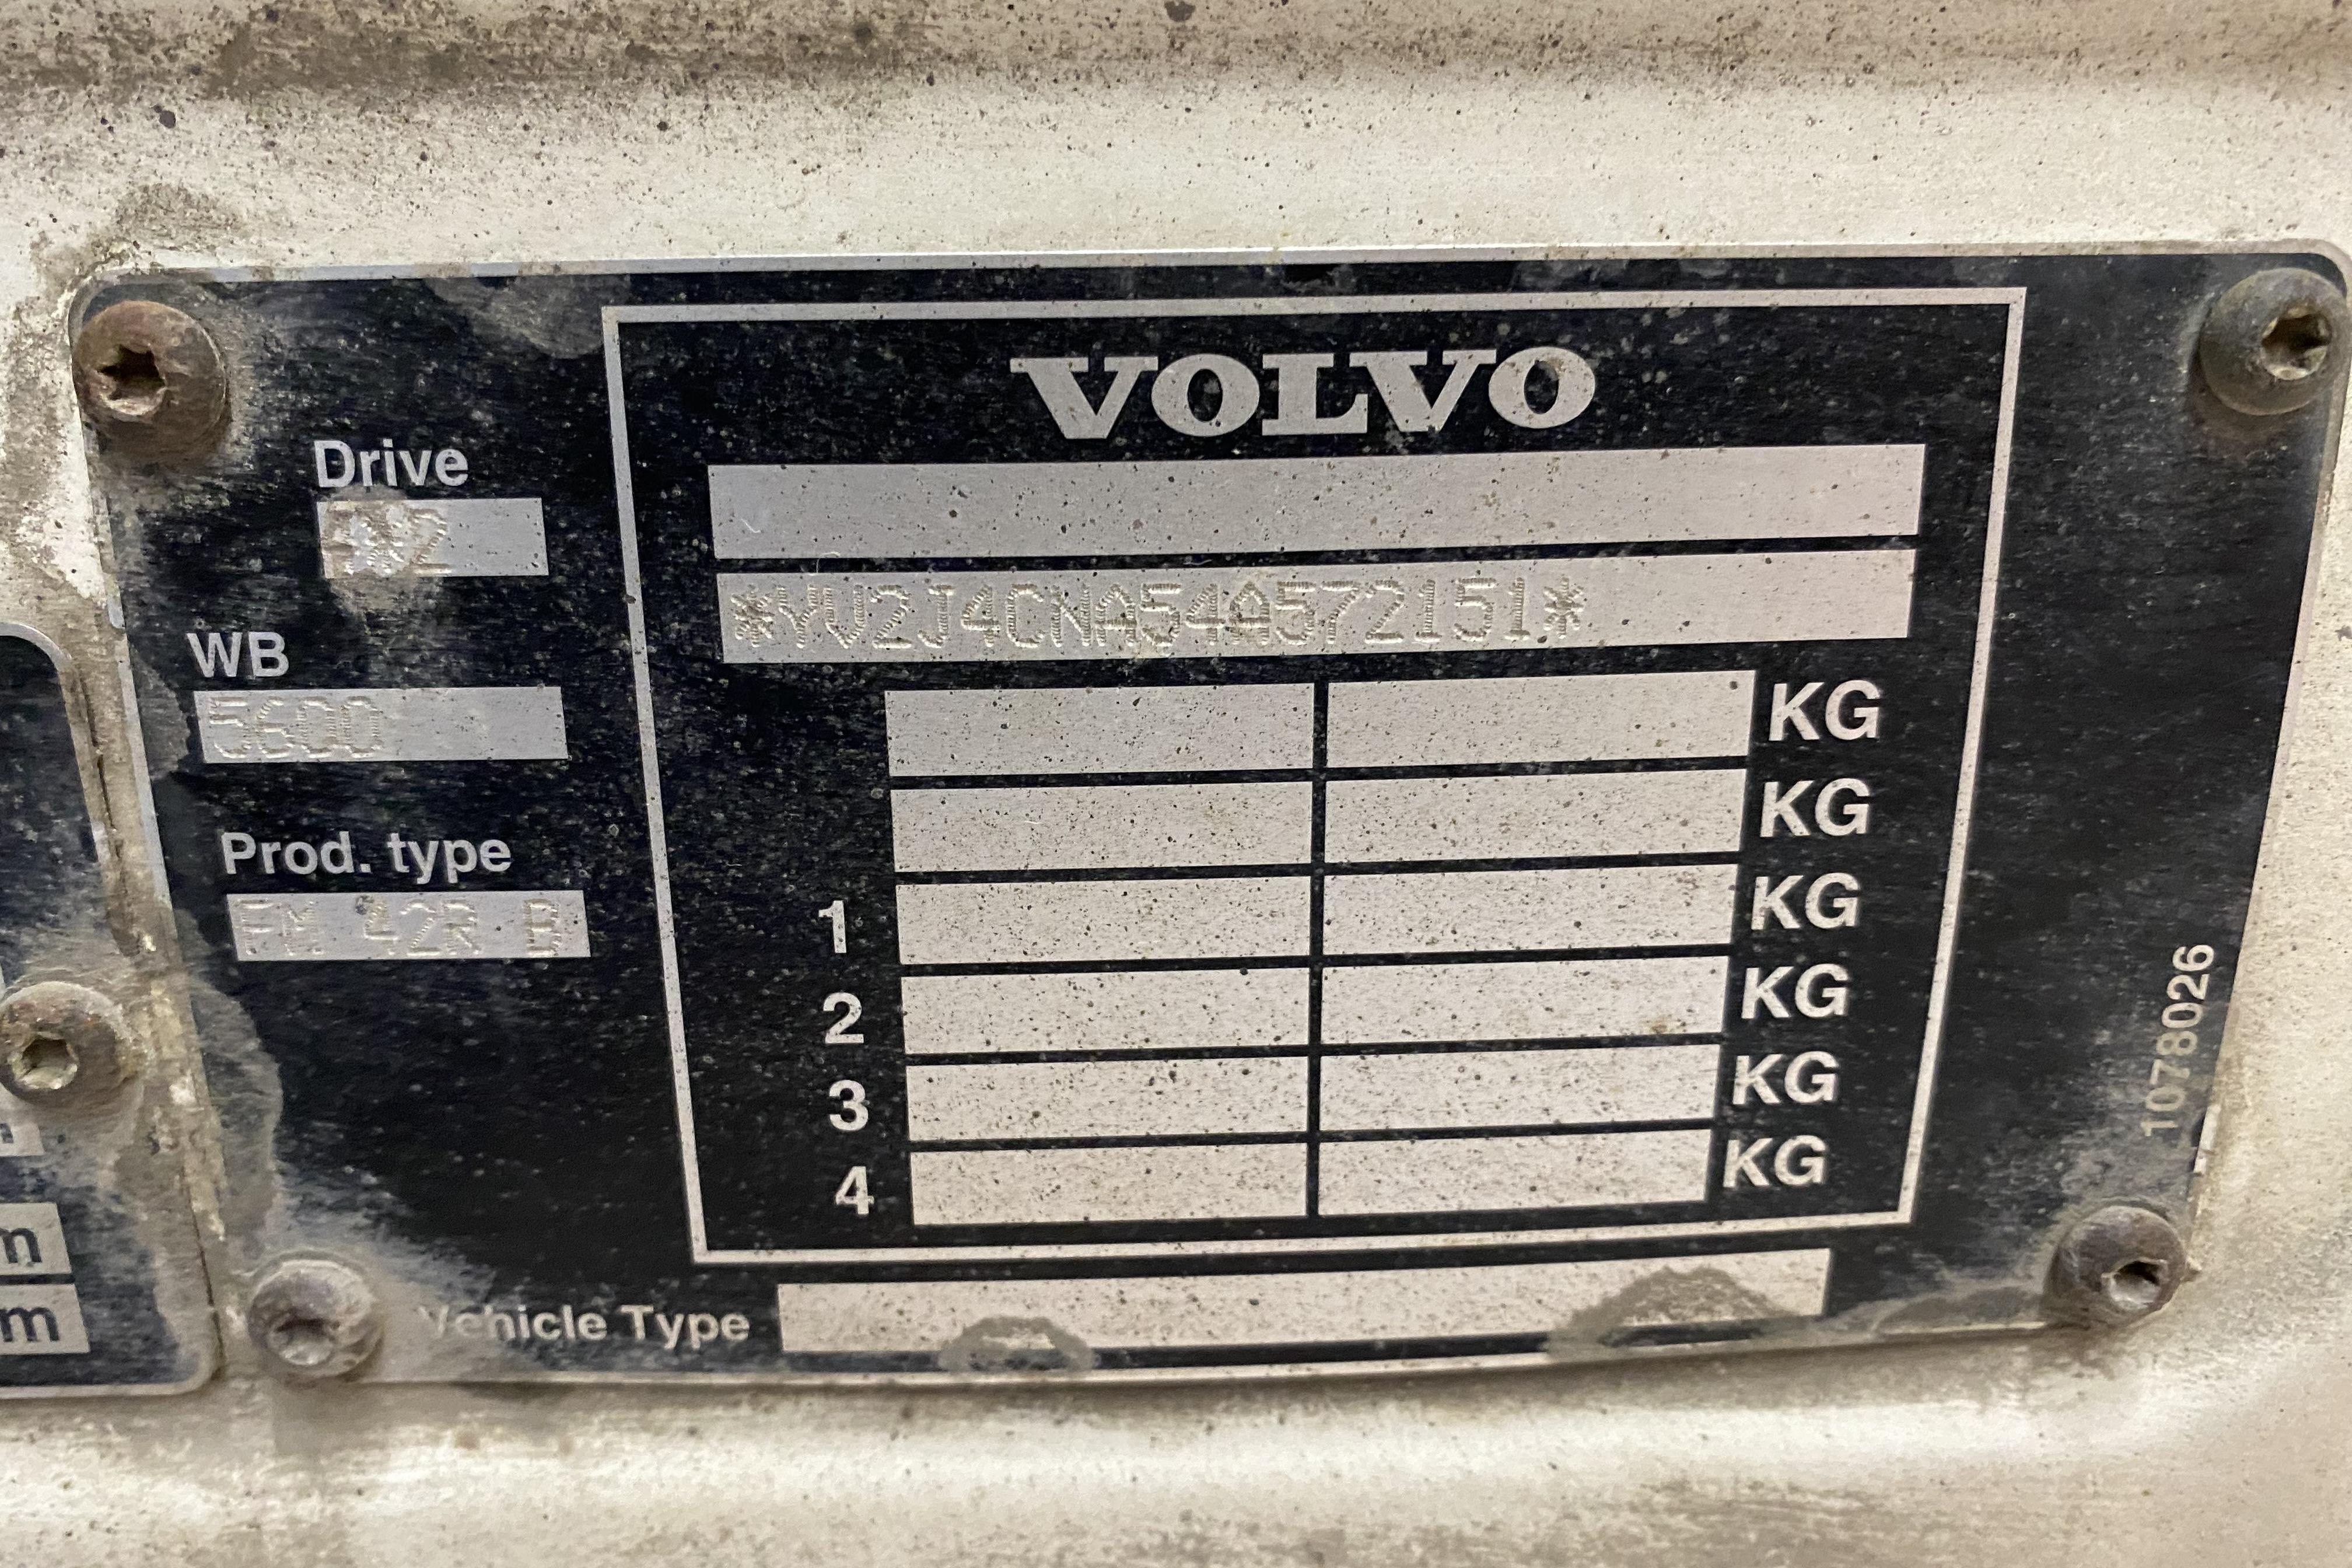 Volvo FM9 - 934 726 km - Automatic - 2004